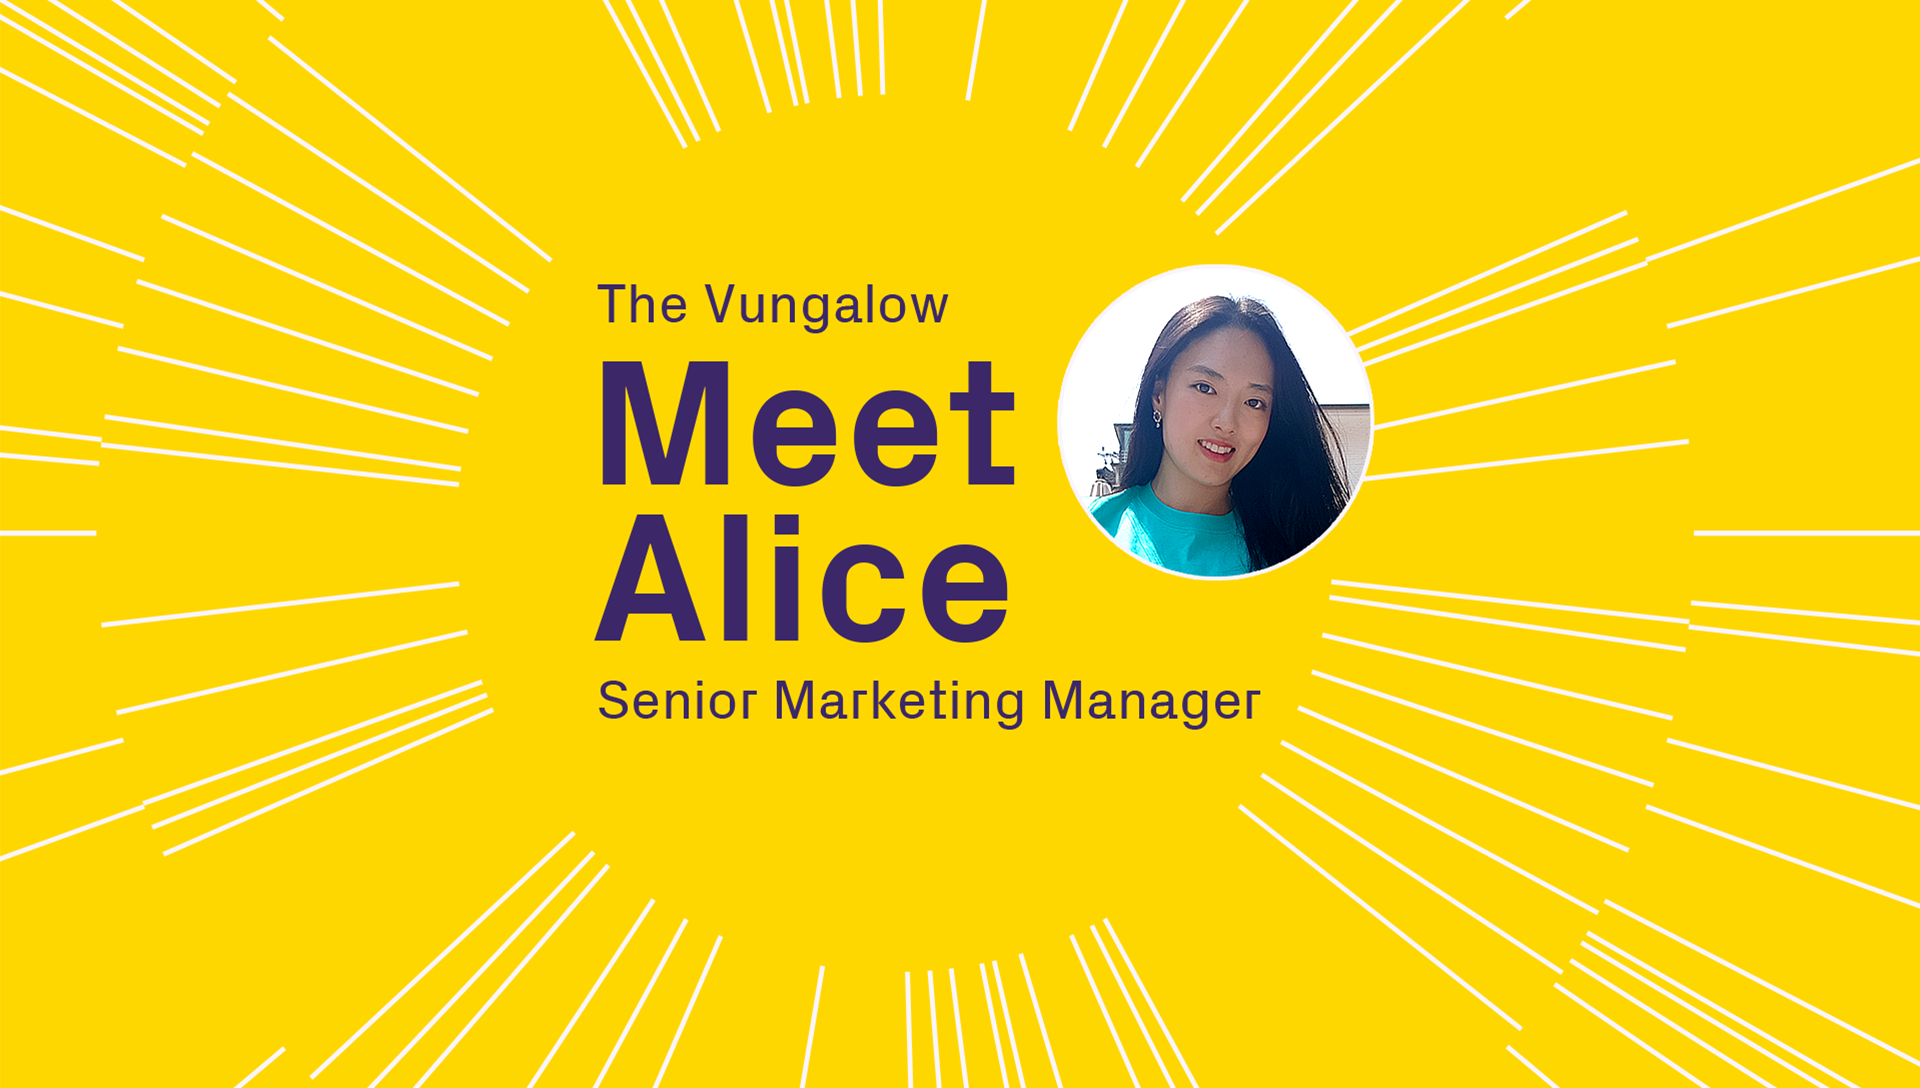 The Vungalow: Meet Alice, Senior Marketing Manager